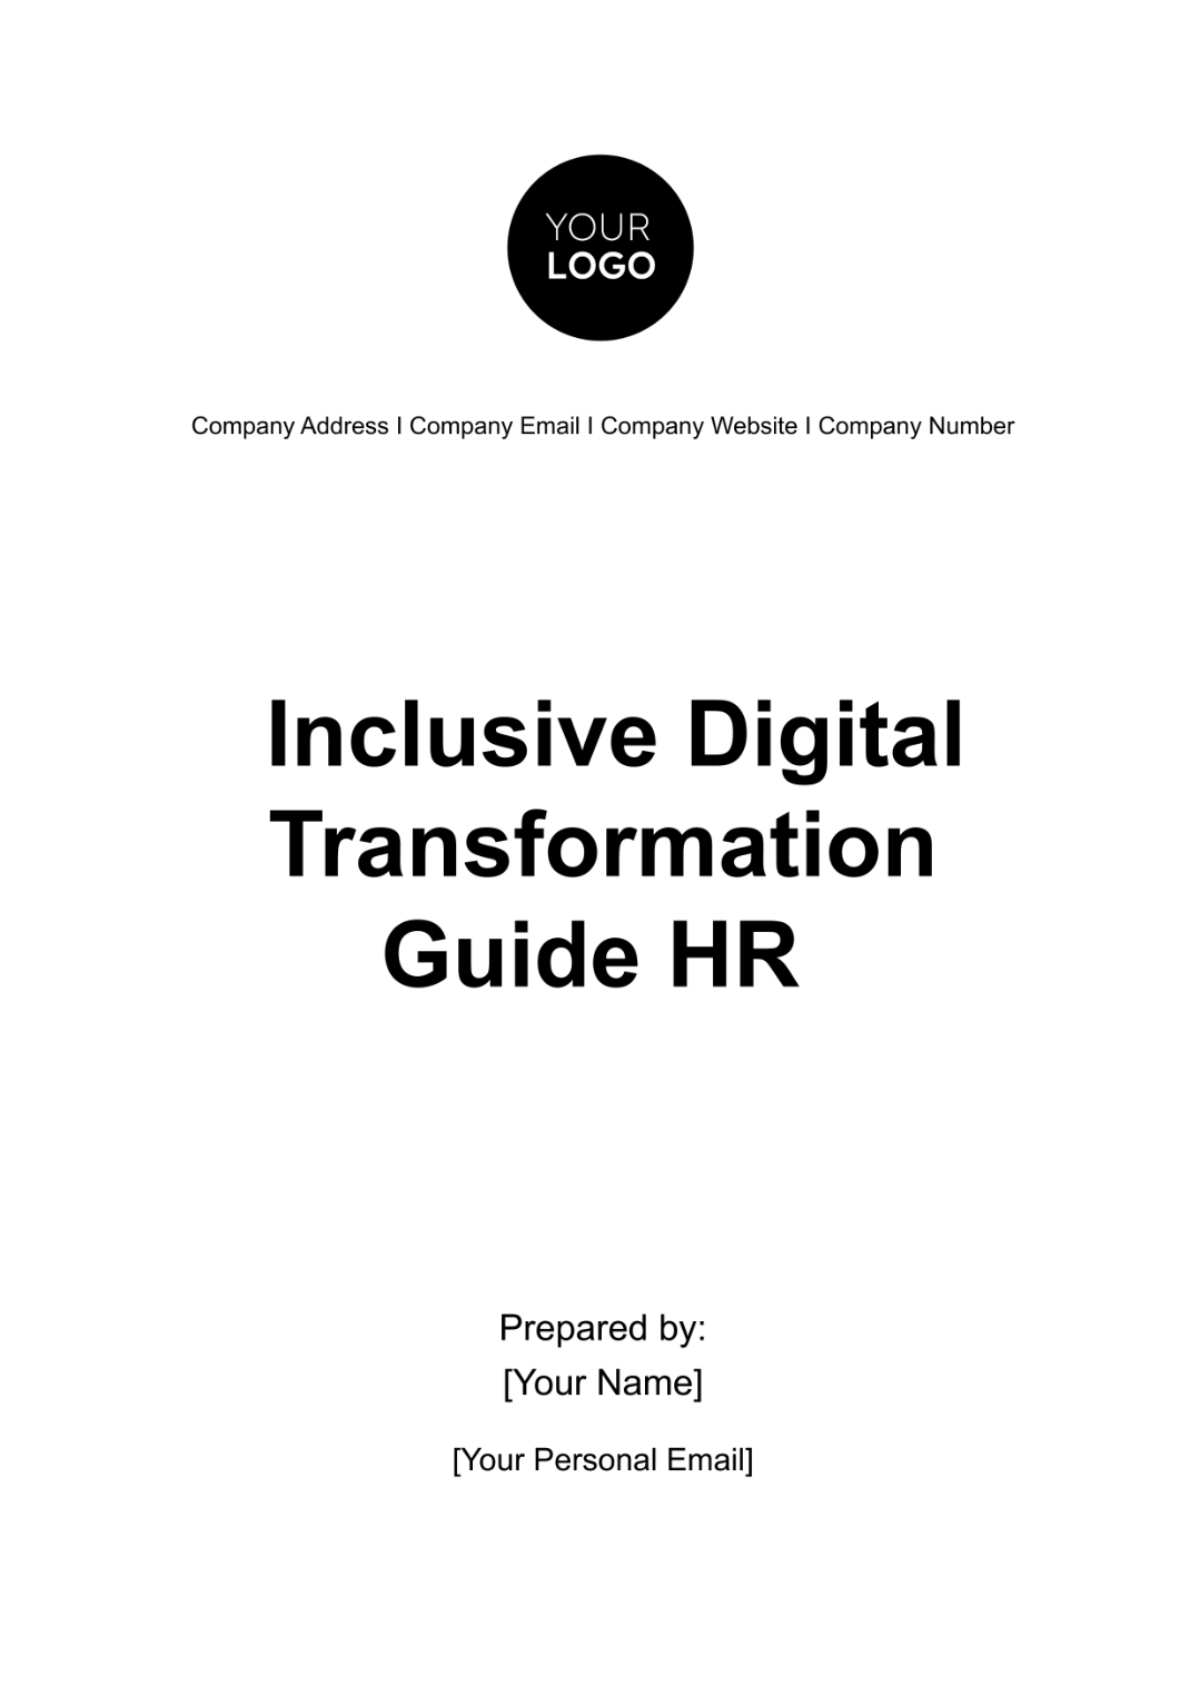 Inclusive Digital Transformation Guide HR Template